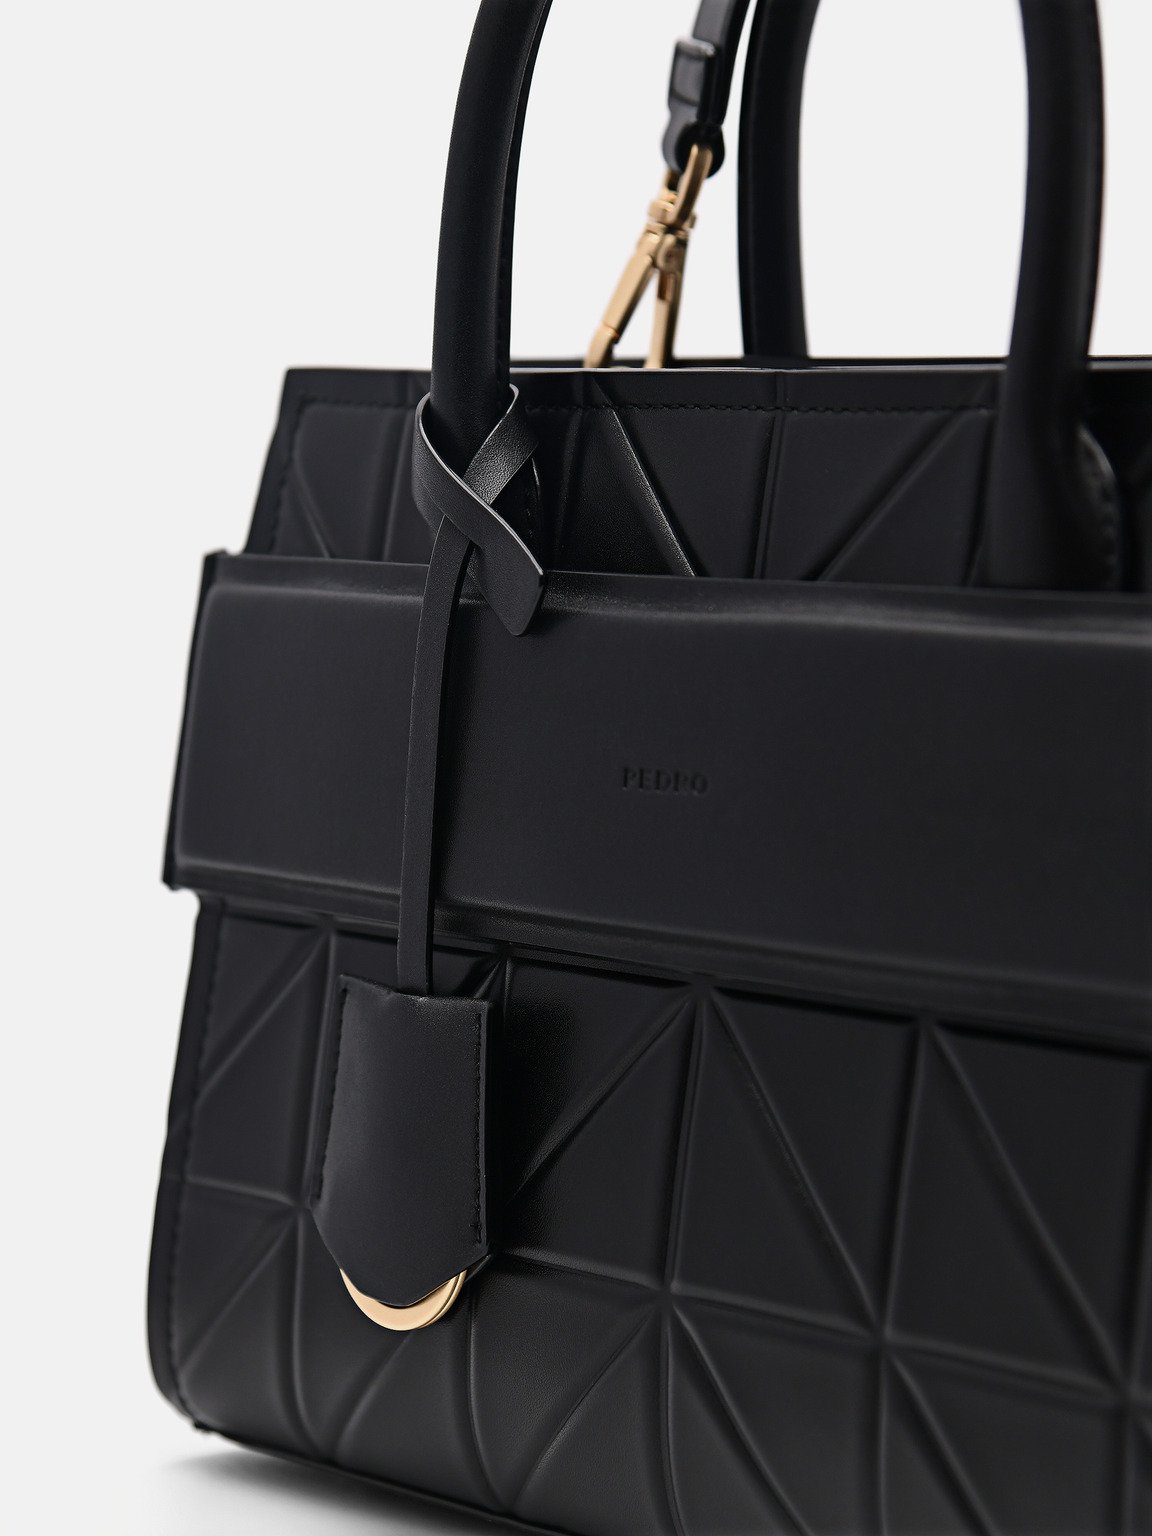 PEDRO Studio Bella Leather Handbag in Pixel, Black